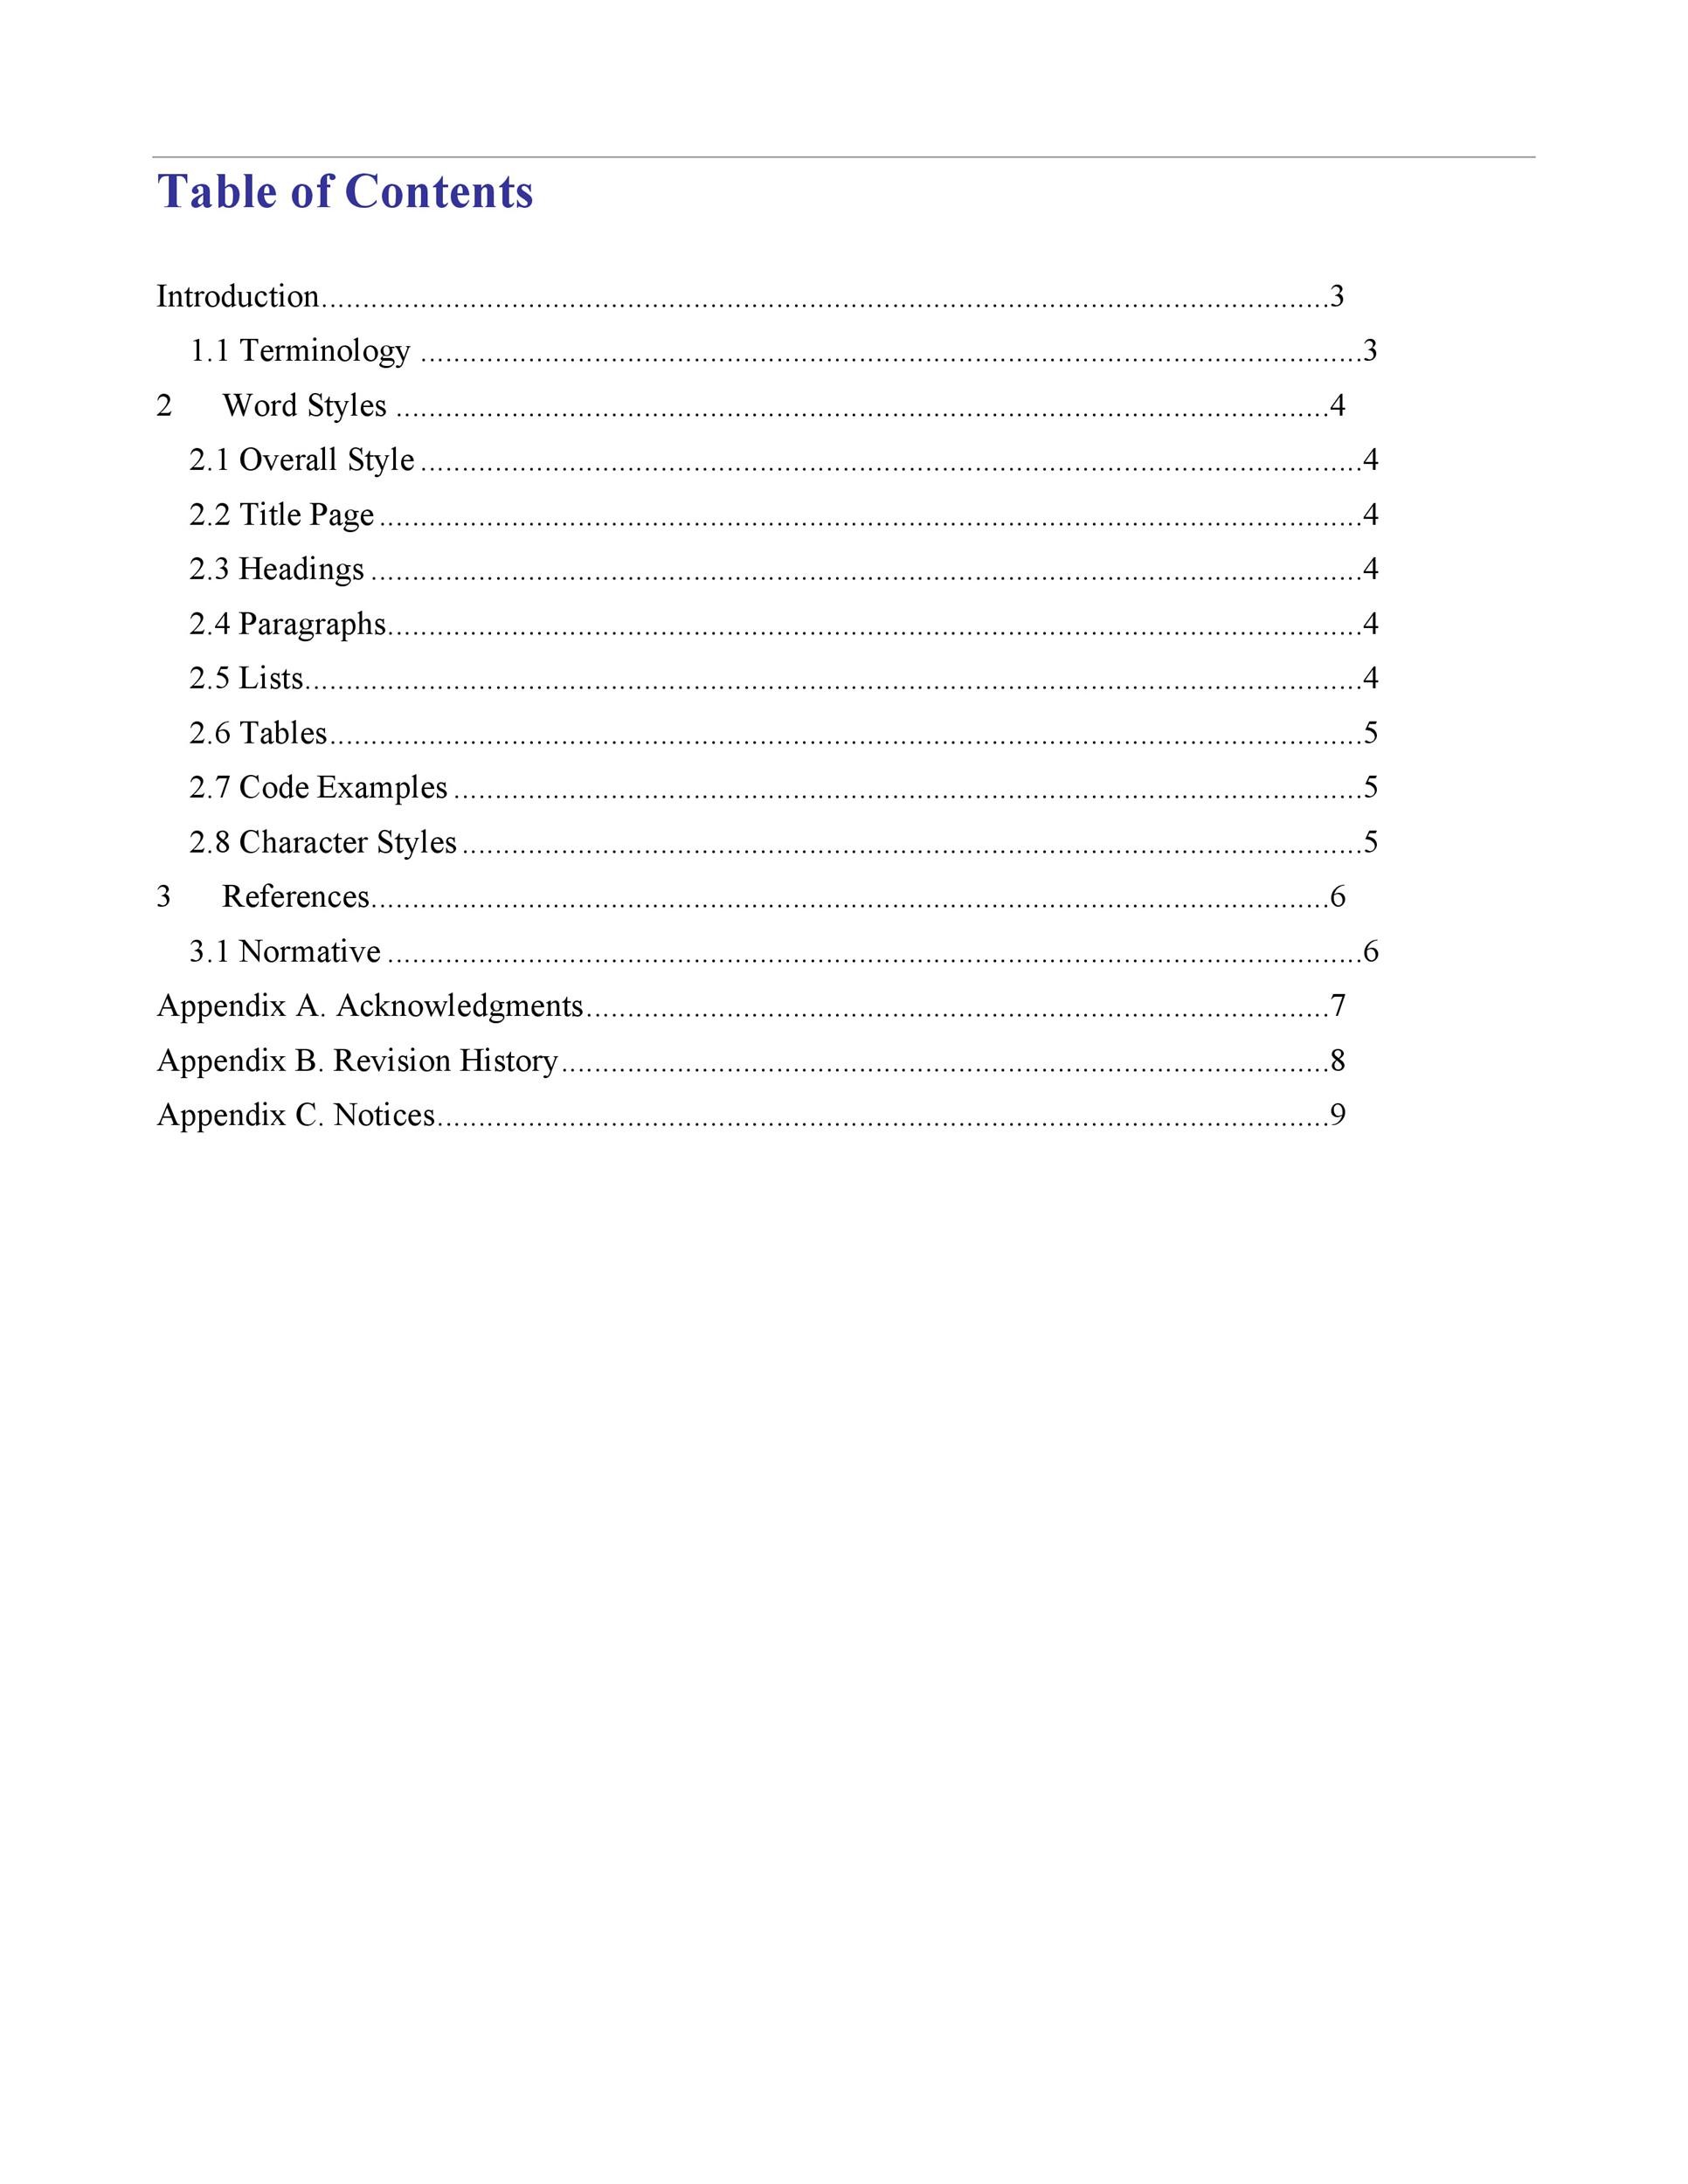 Table Of Contents Word Word Table Of Contents 9720 Hot Sex Picture 3384